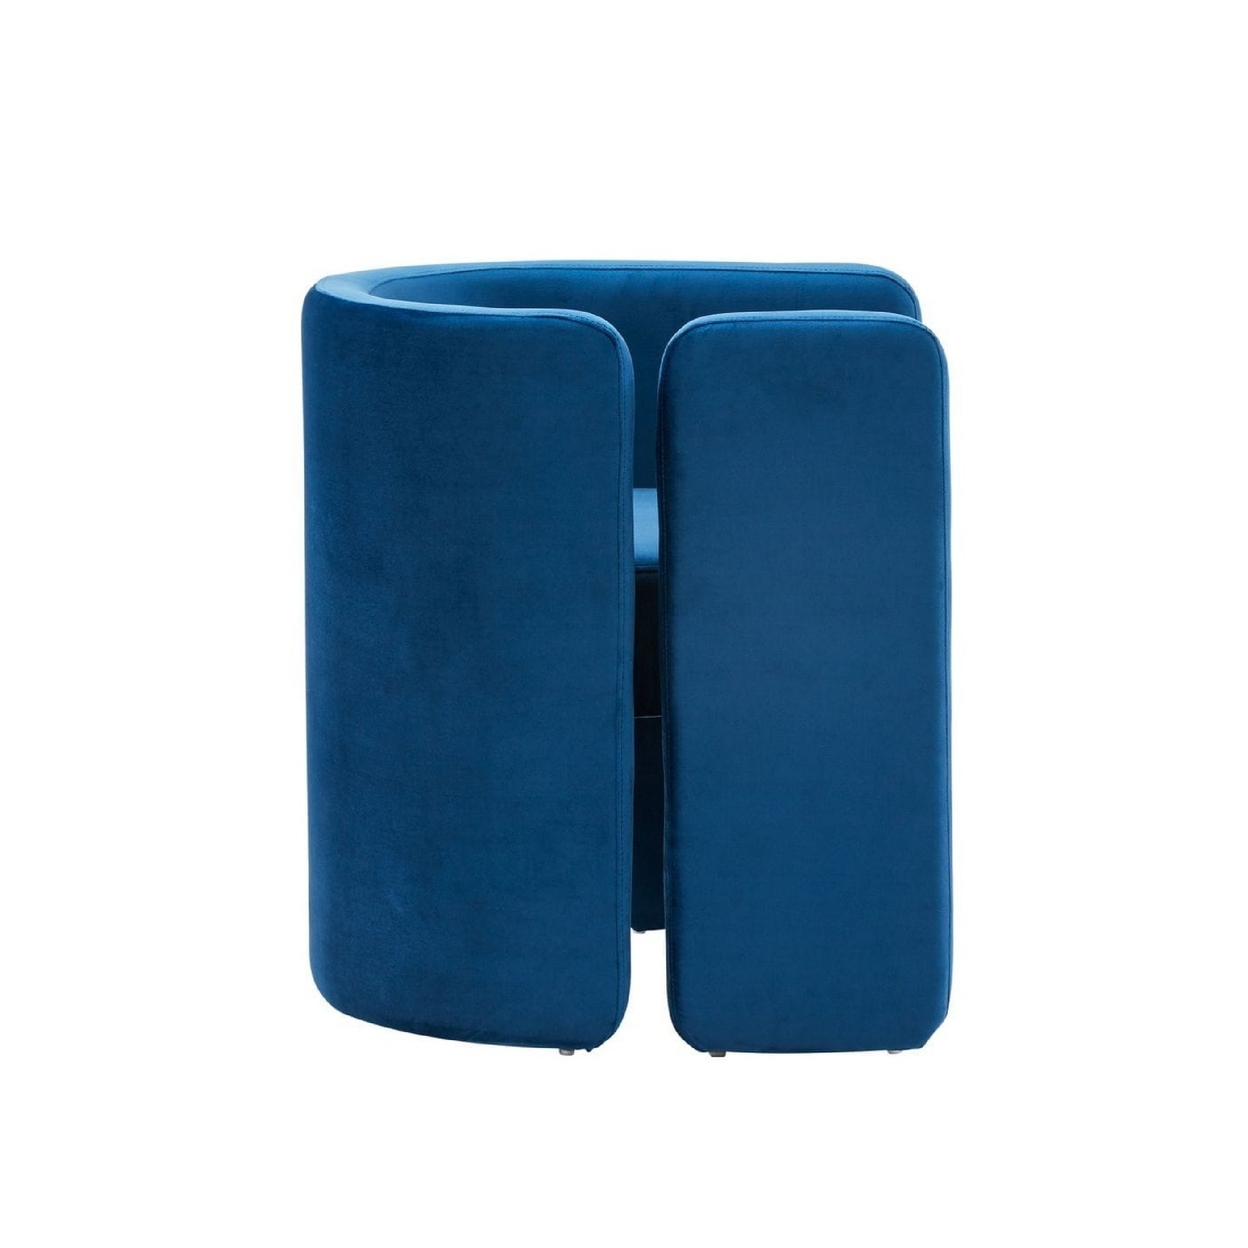 Cid 24 Inch Accent Chair, Blue Velvet, Curved Backrest, Unique Panel Legs - Saltoro Sherpi